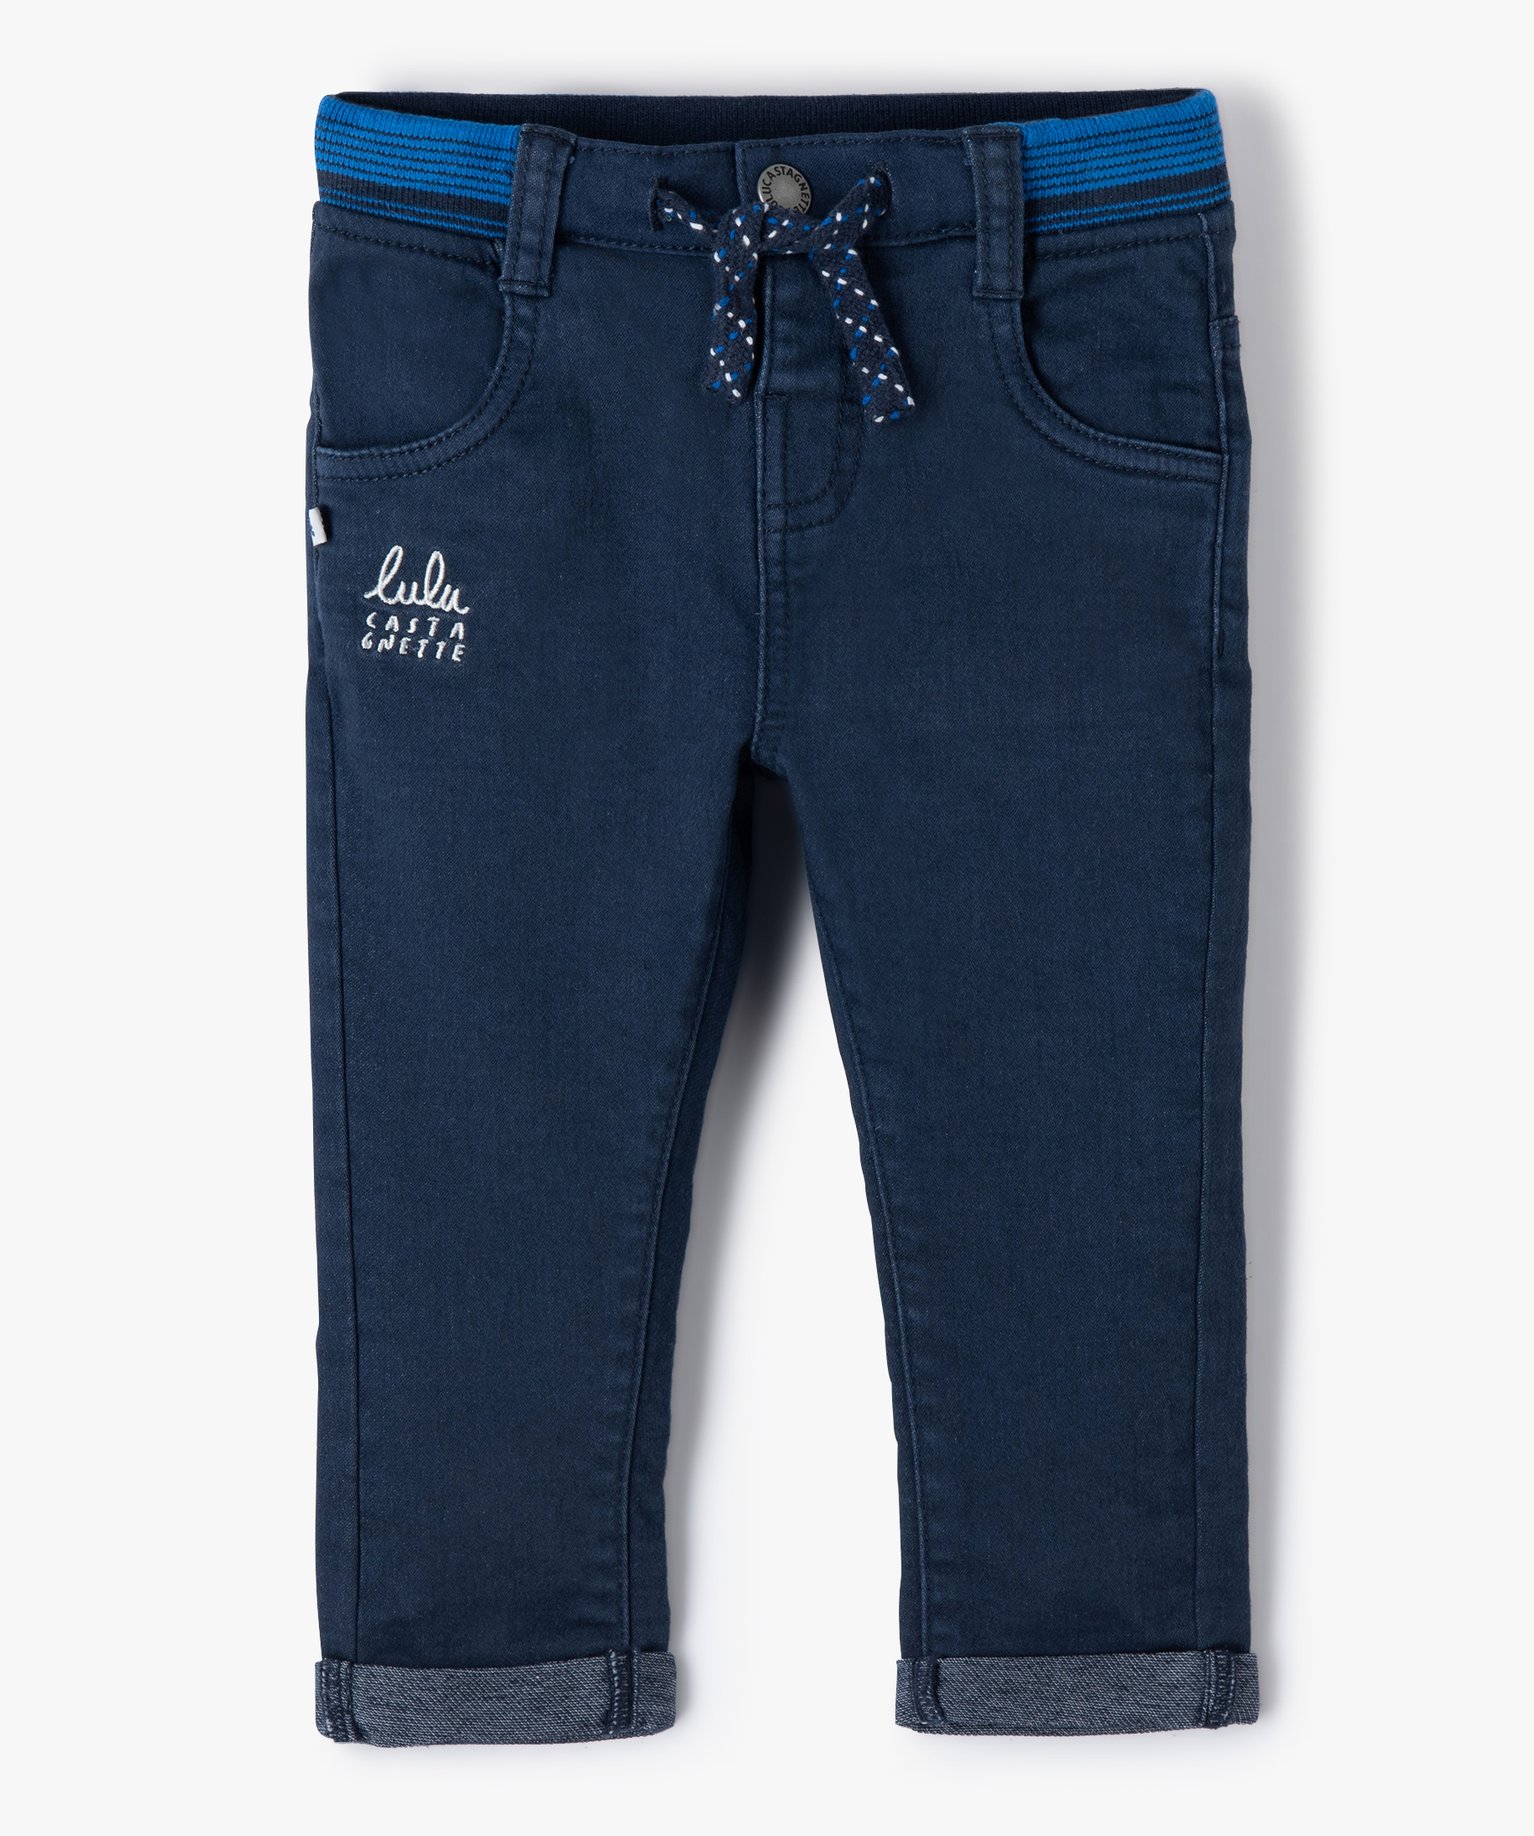 pantalon bebe garcon avec taille elastiquee - lulu castagnette bleu